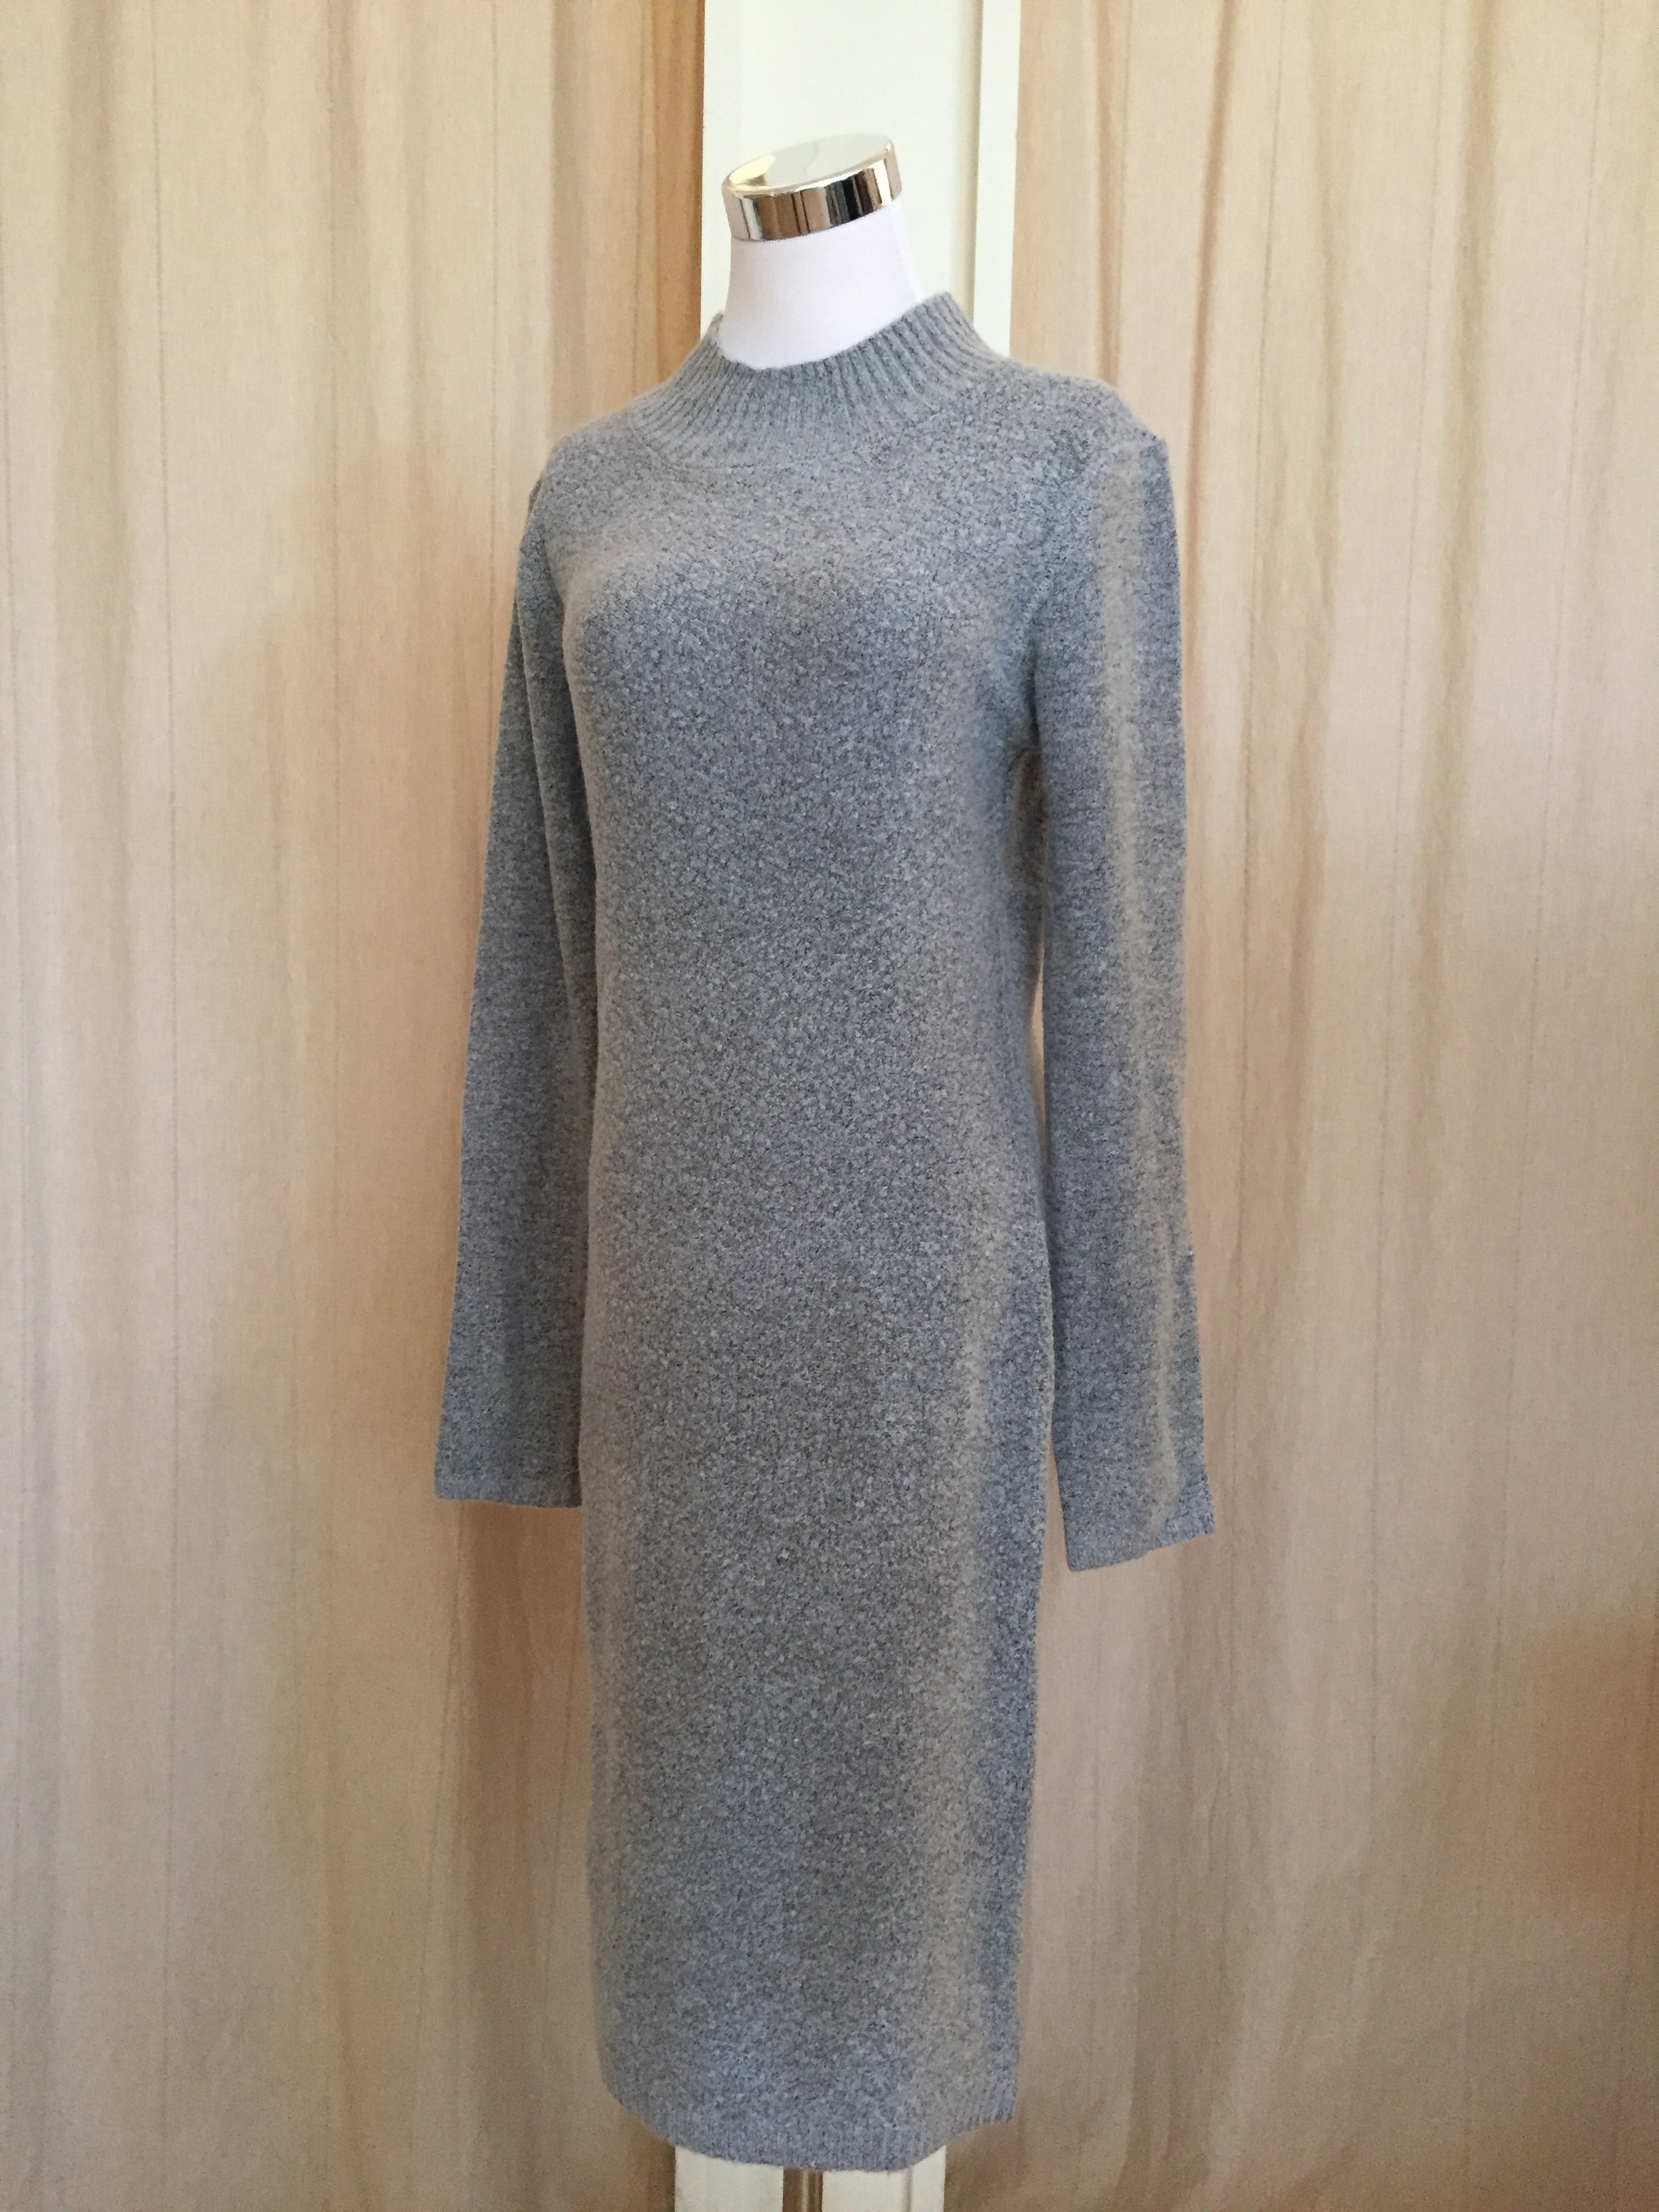 Mock Neck Sweater Dress ($42)